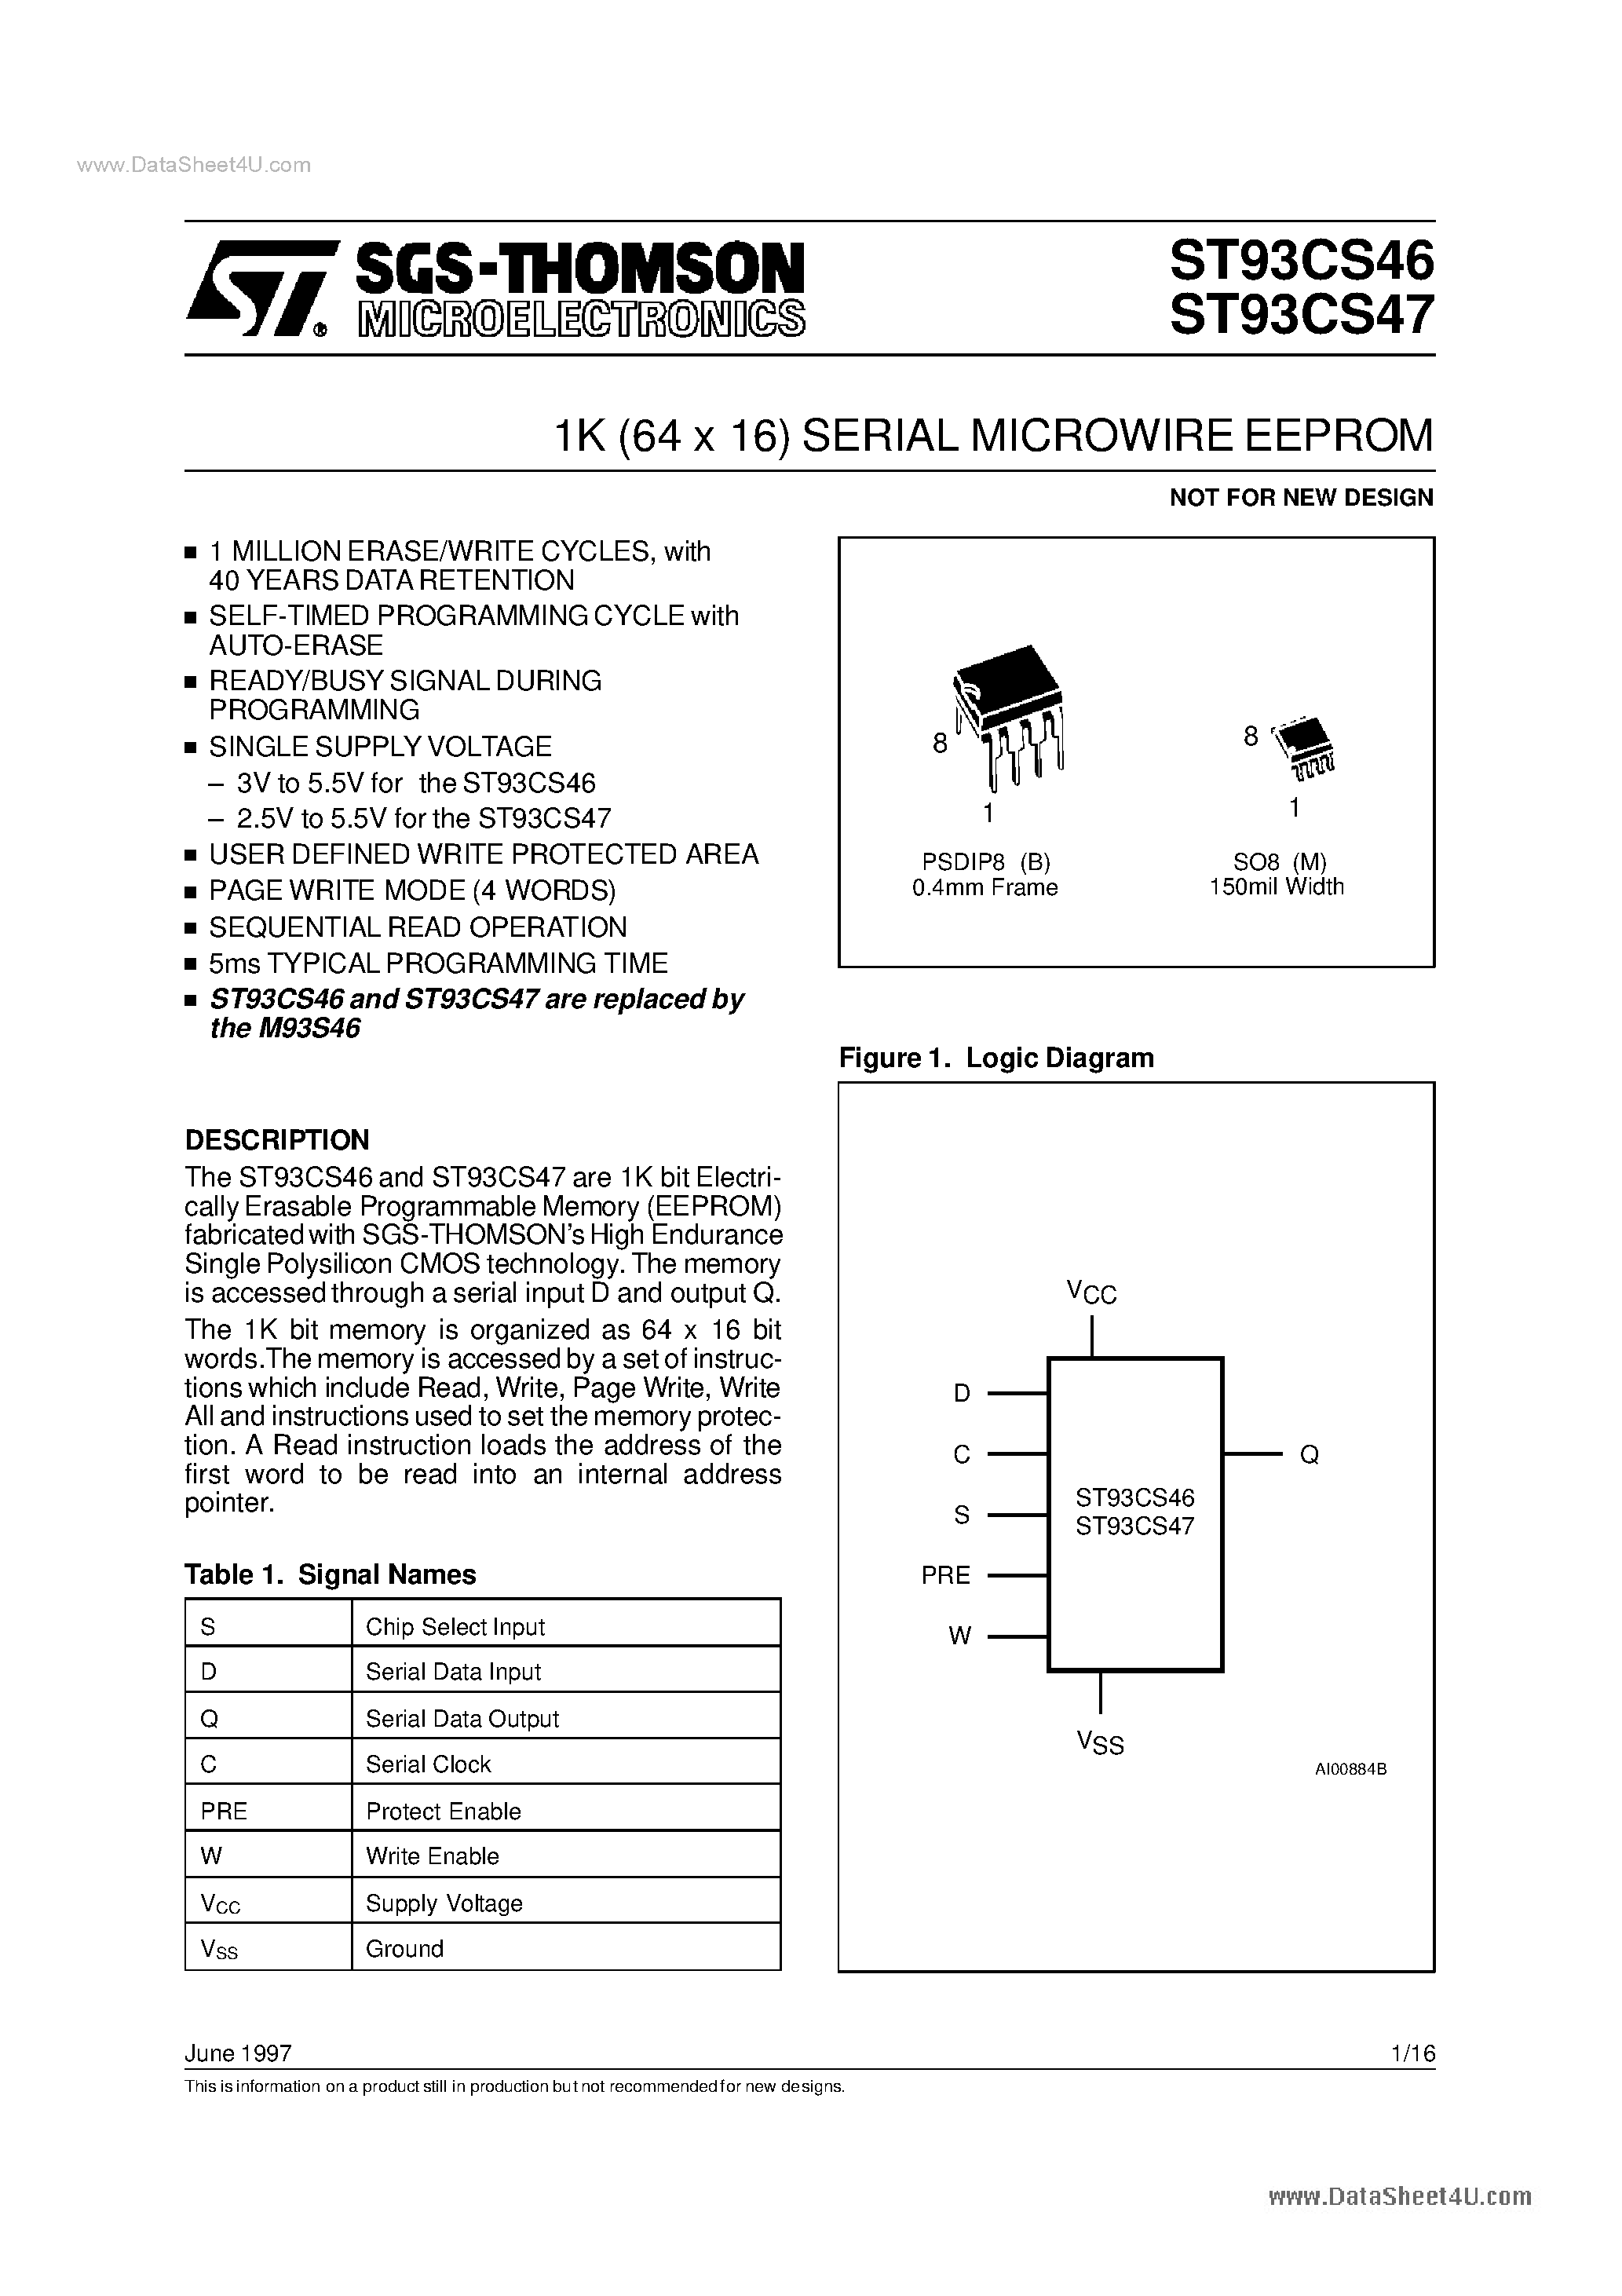 Datasheet ST93CS47 - (ST93CS46 / ST93CS47) 1K 64 x 16 SERIAL MICROWIRE EEPROM page 1